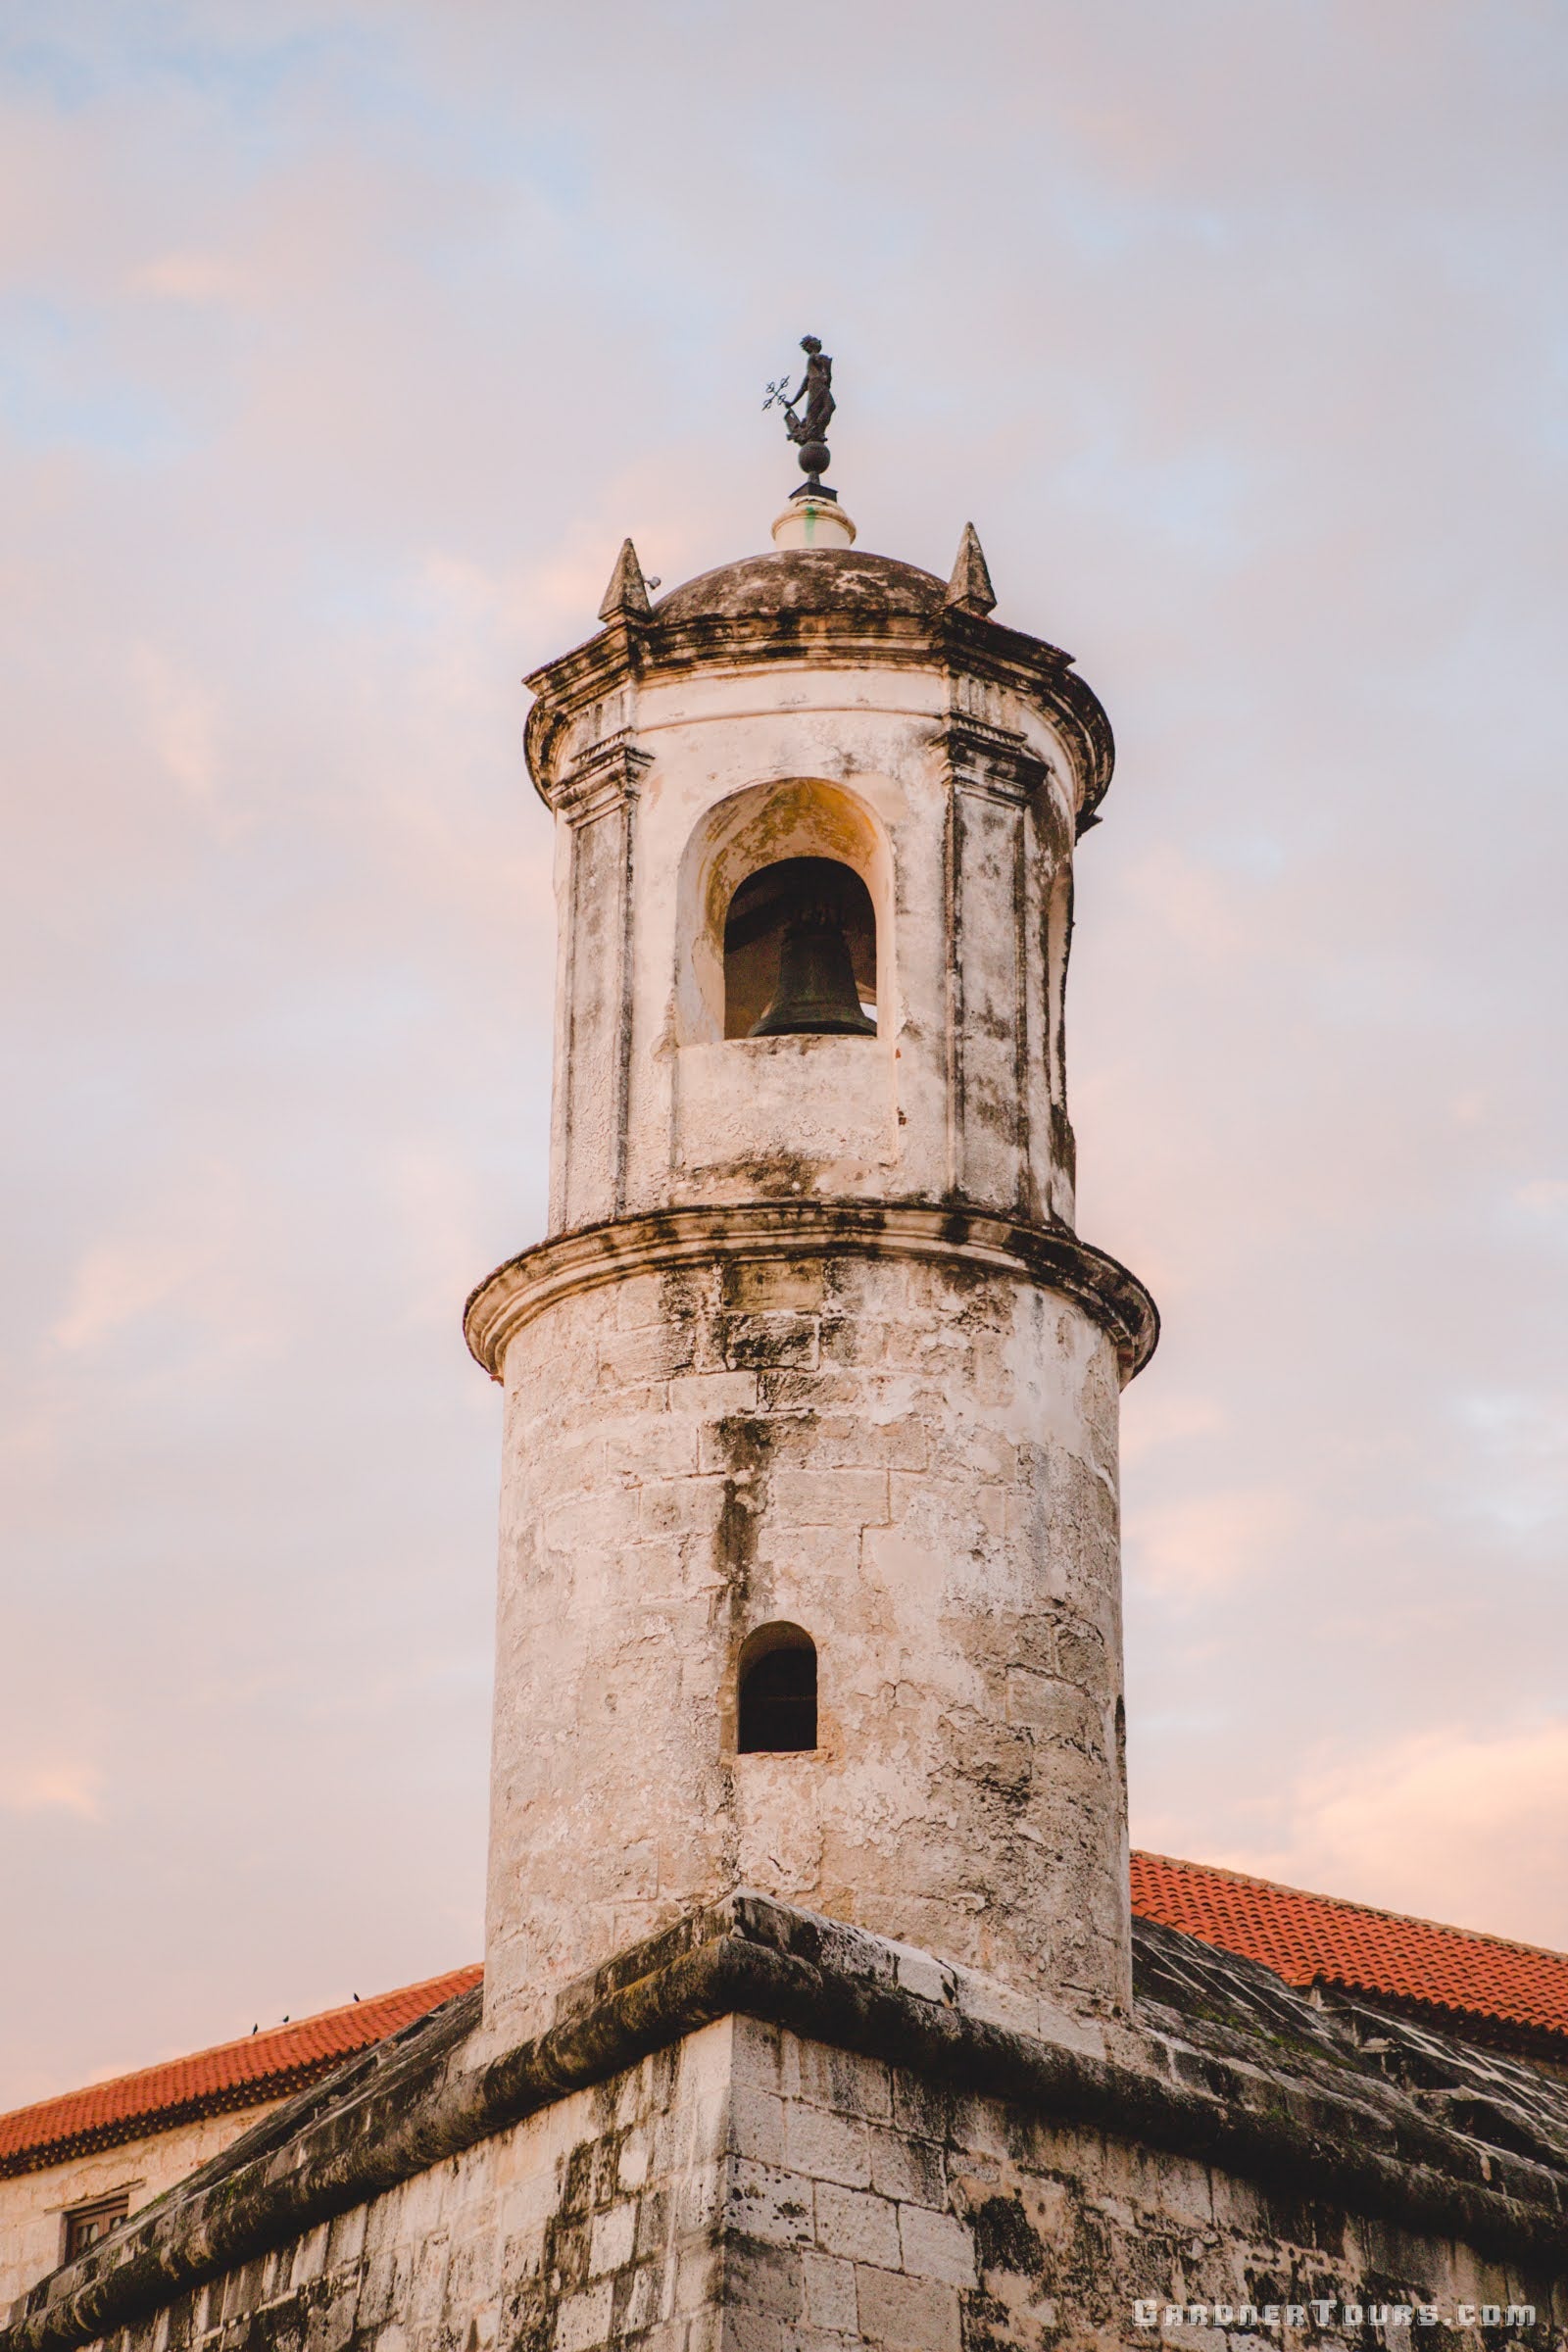 La Giraldilla Statue on the Tower of the Castle of the Royal Force in Havana, Cuba